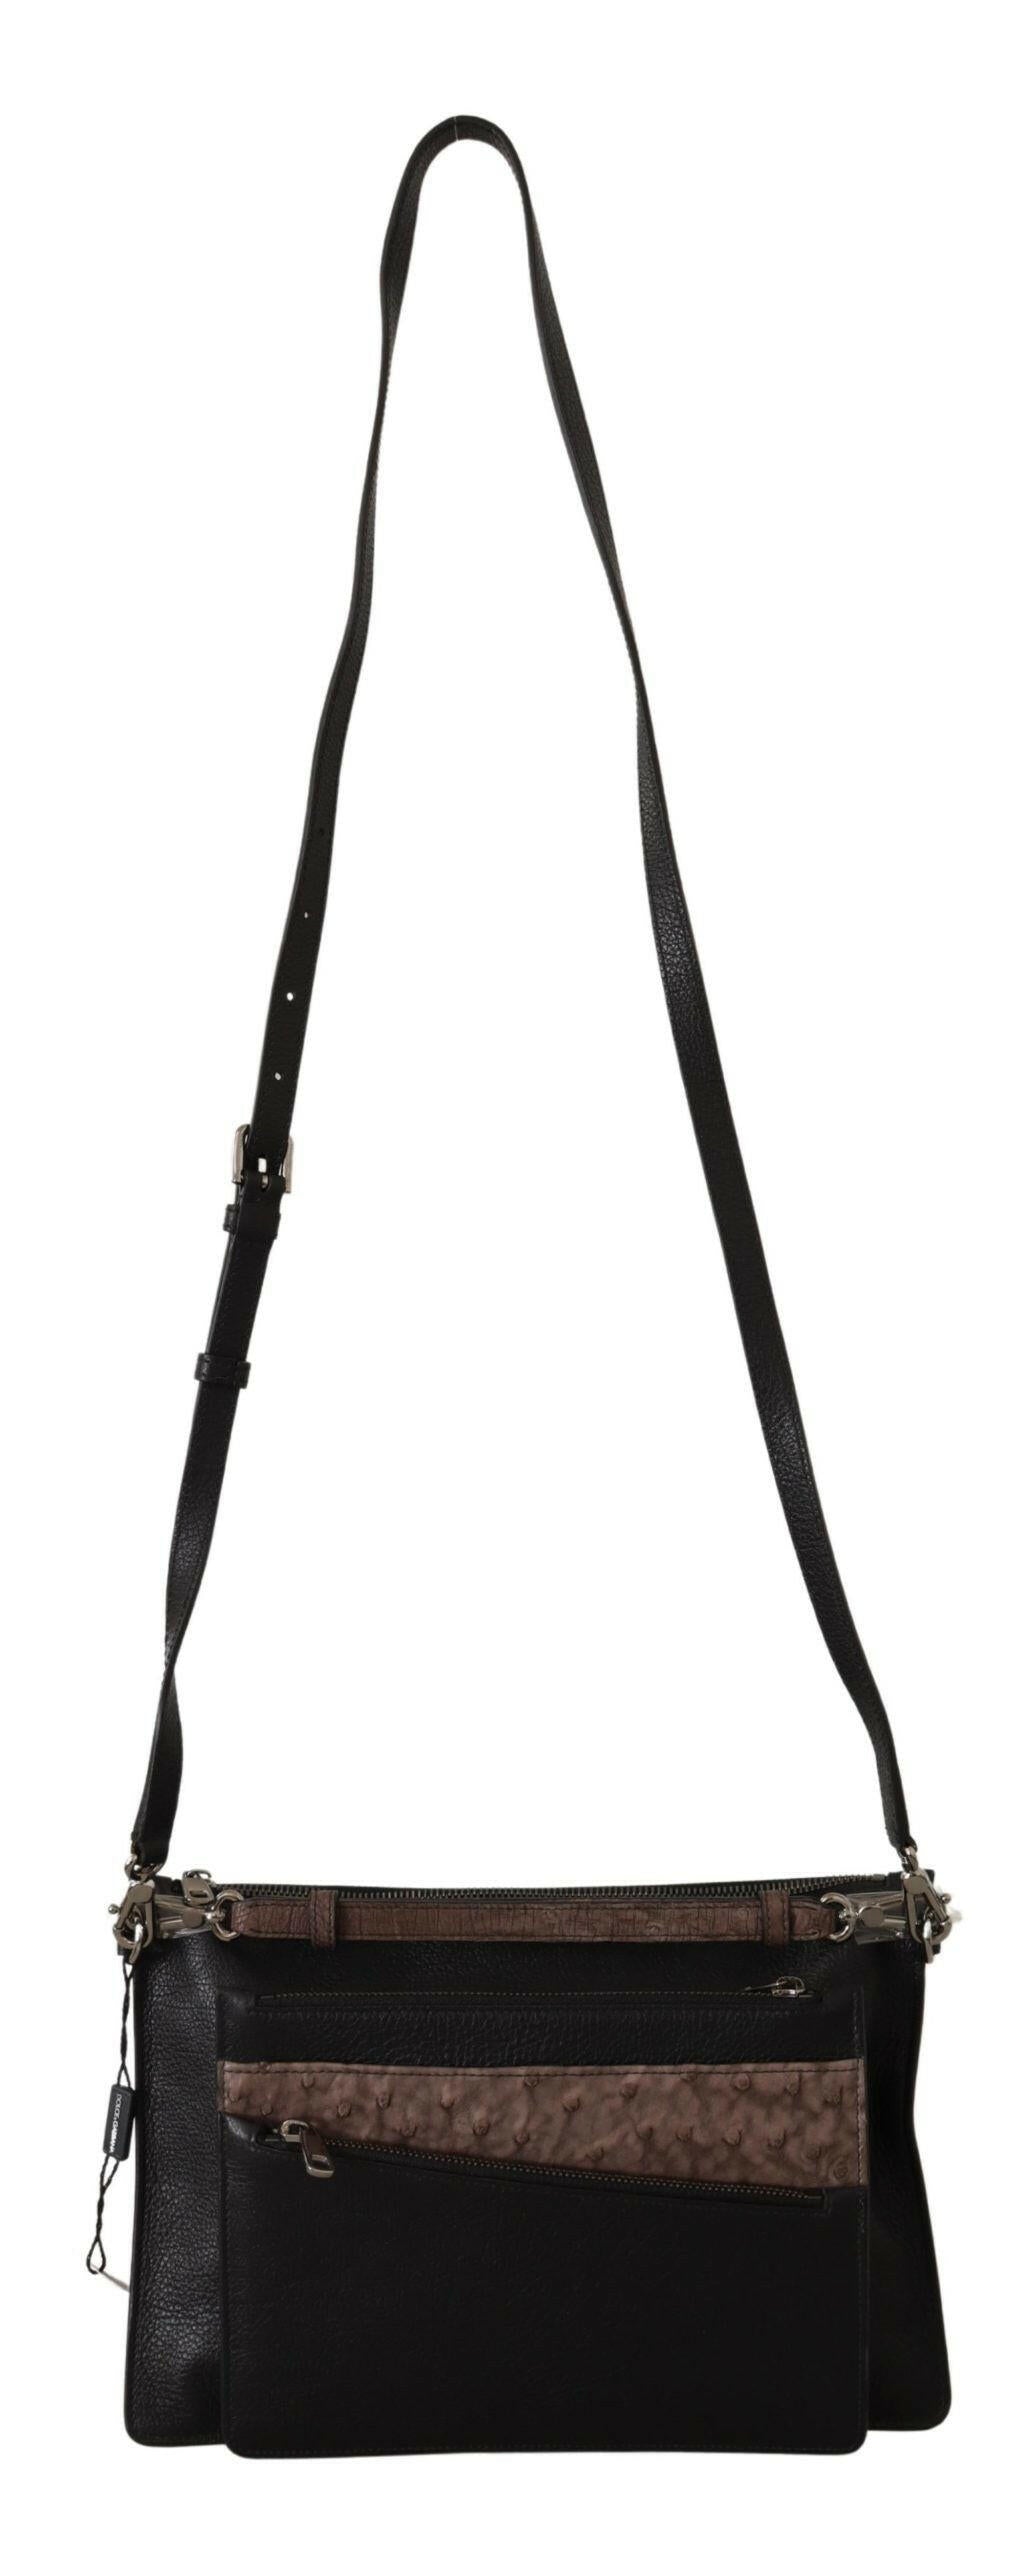 Dolce & Gabbana Black Exotic Leather Shoulder Sling Alta Sartoria Bag - GENUINE AUTHENTIC BRAND LLC  